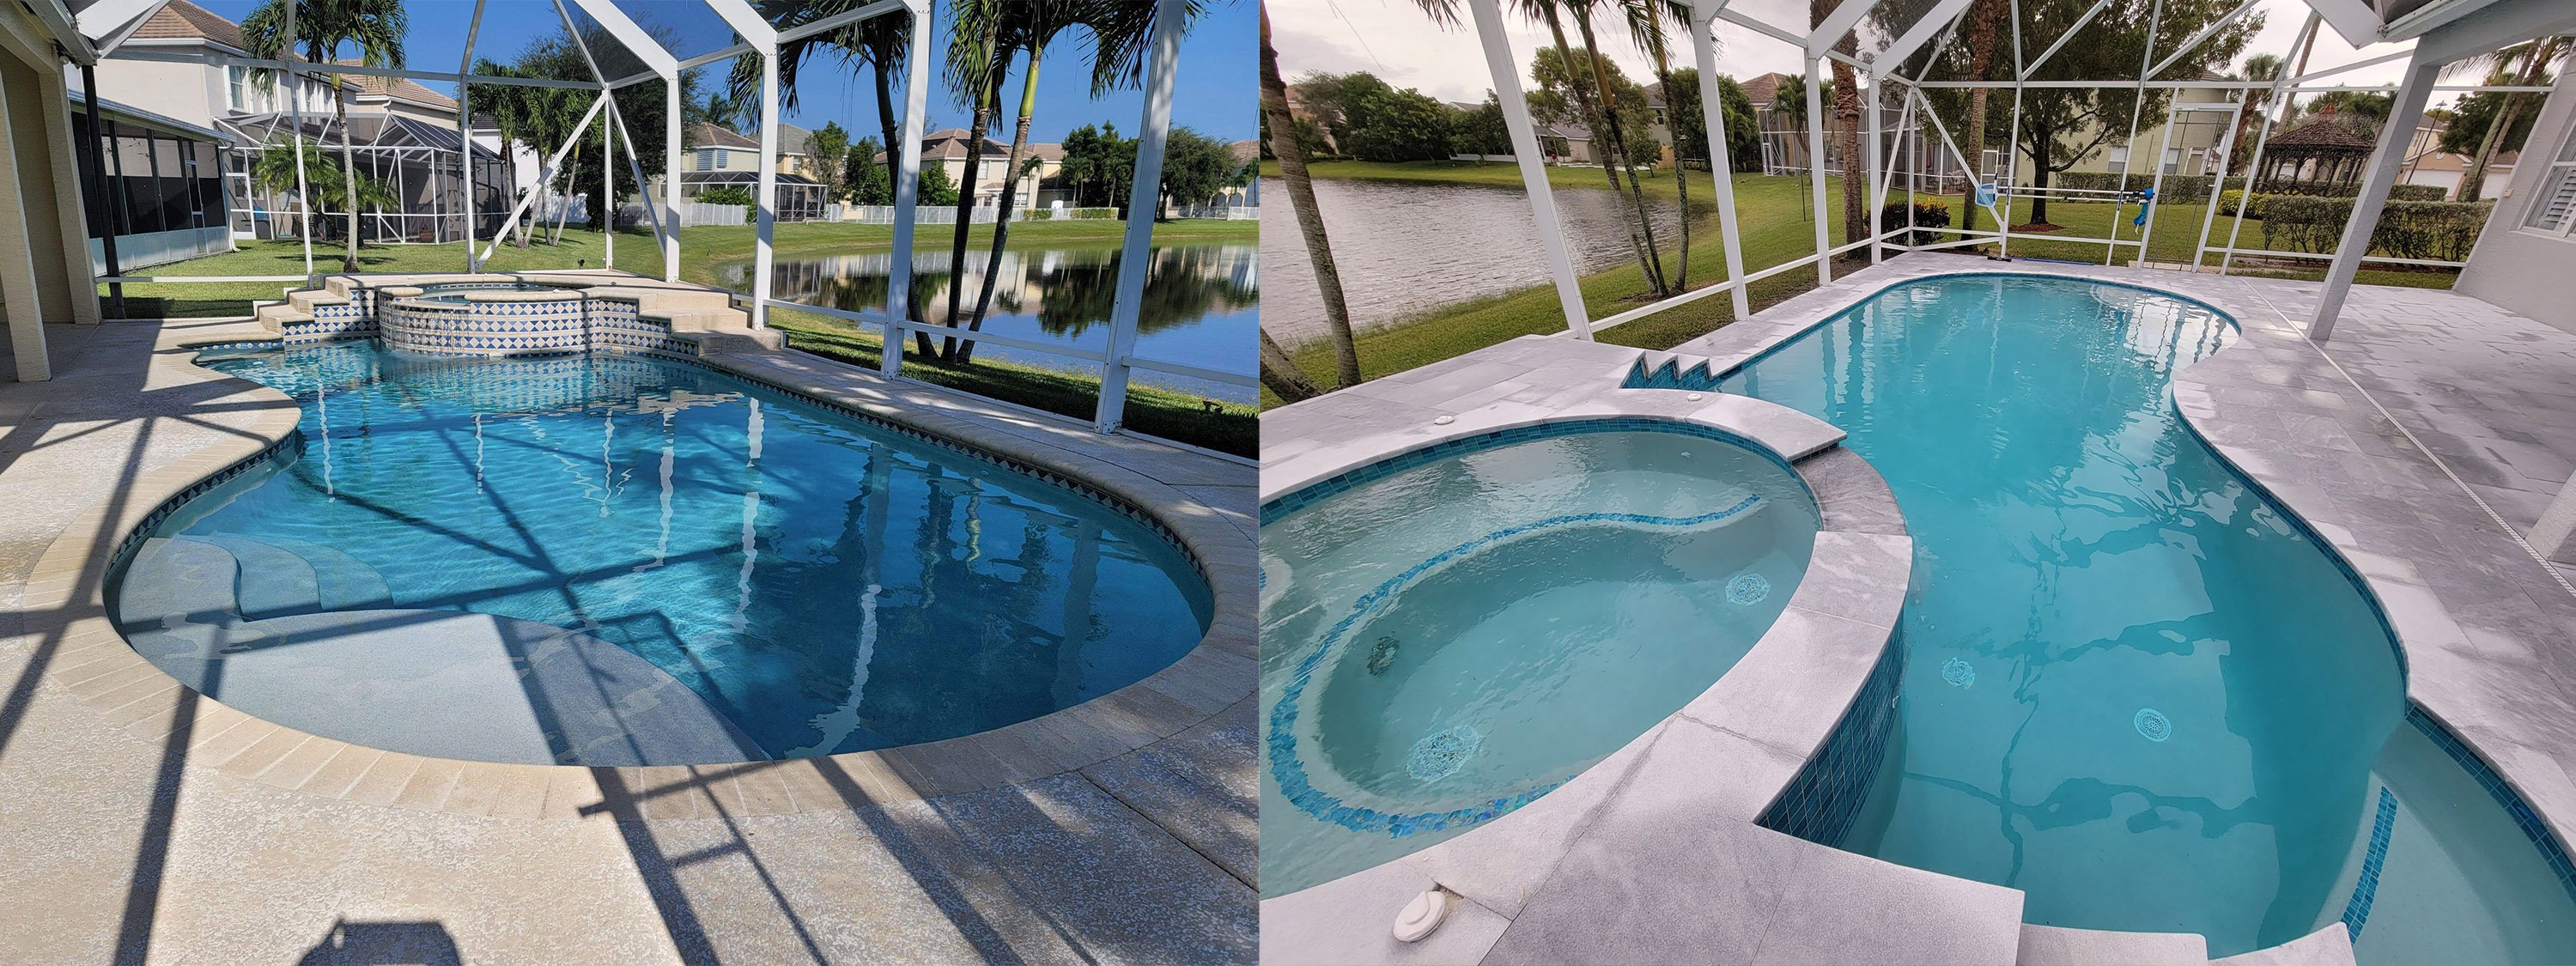 Residential pool renovations